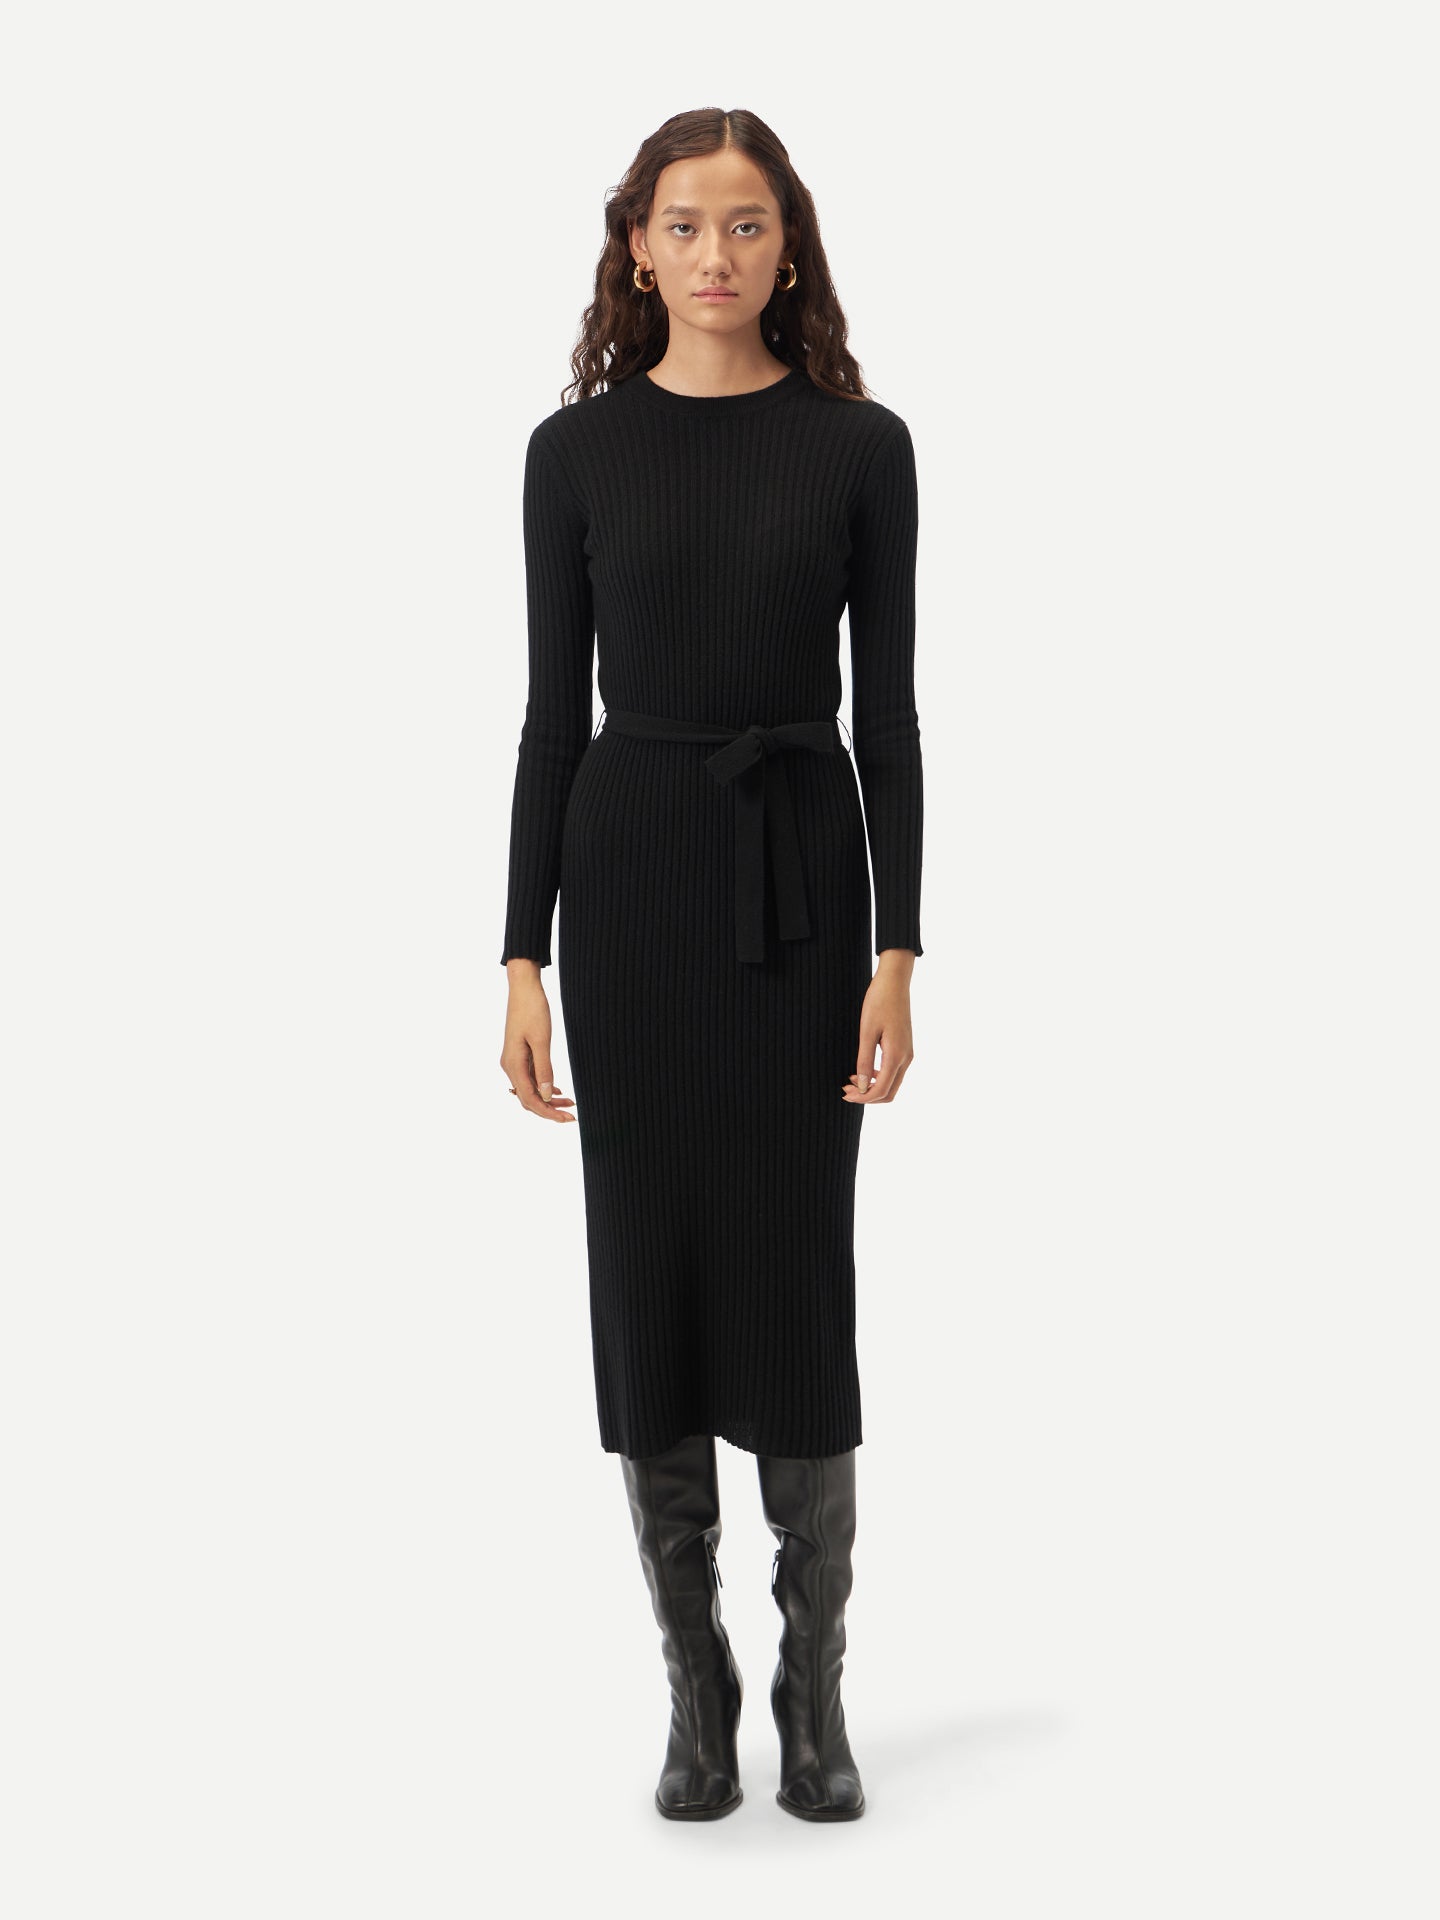 Women's Cashmere Knit Dress with Belt Black - Gobi Cashmere